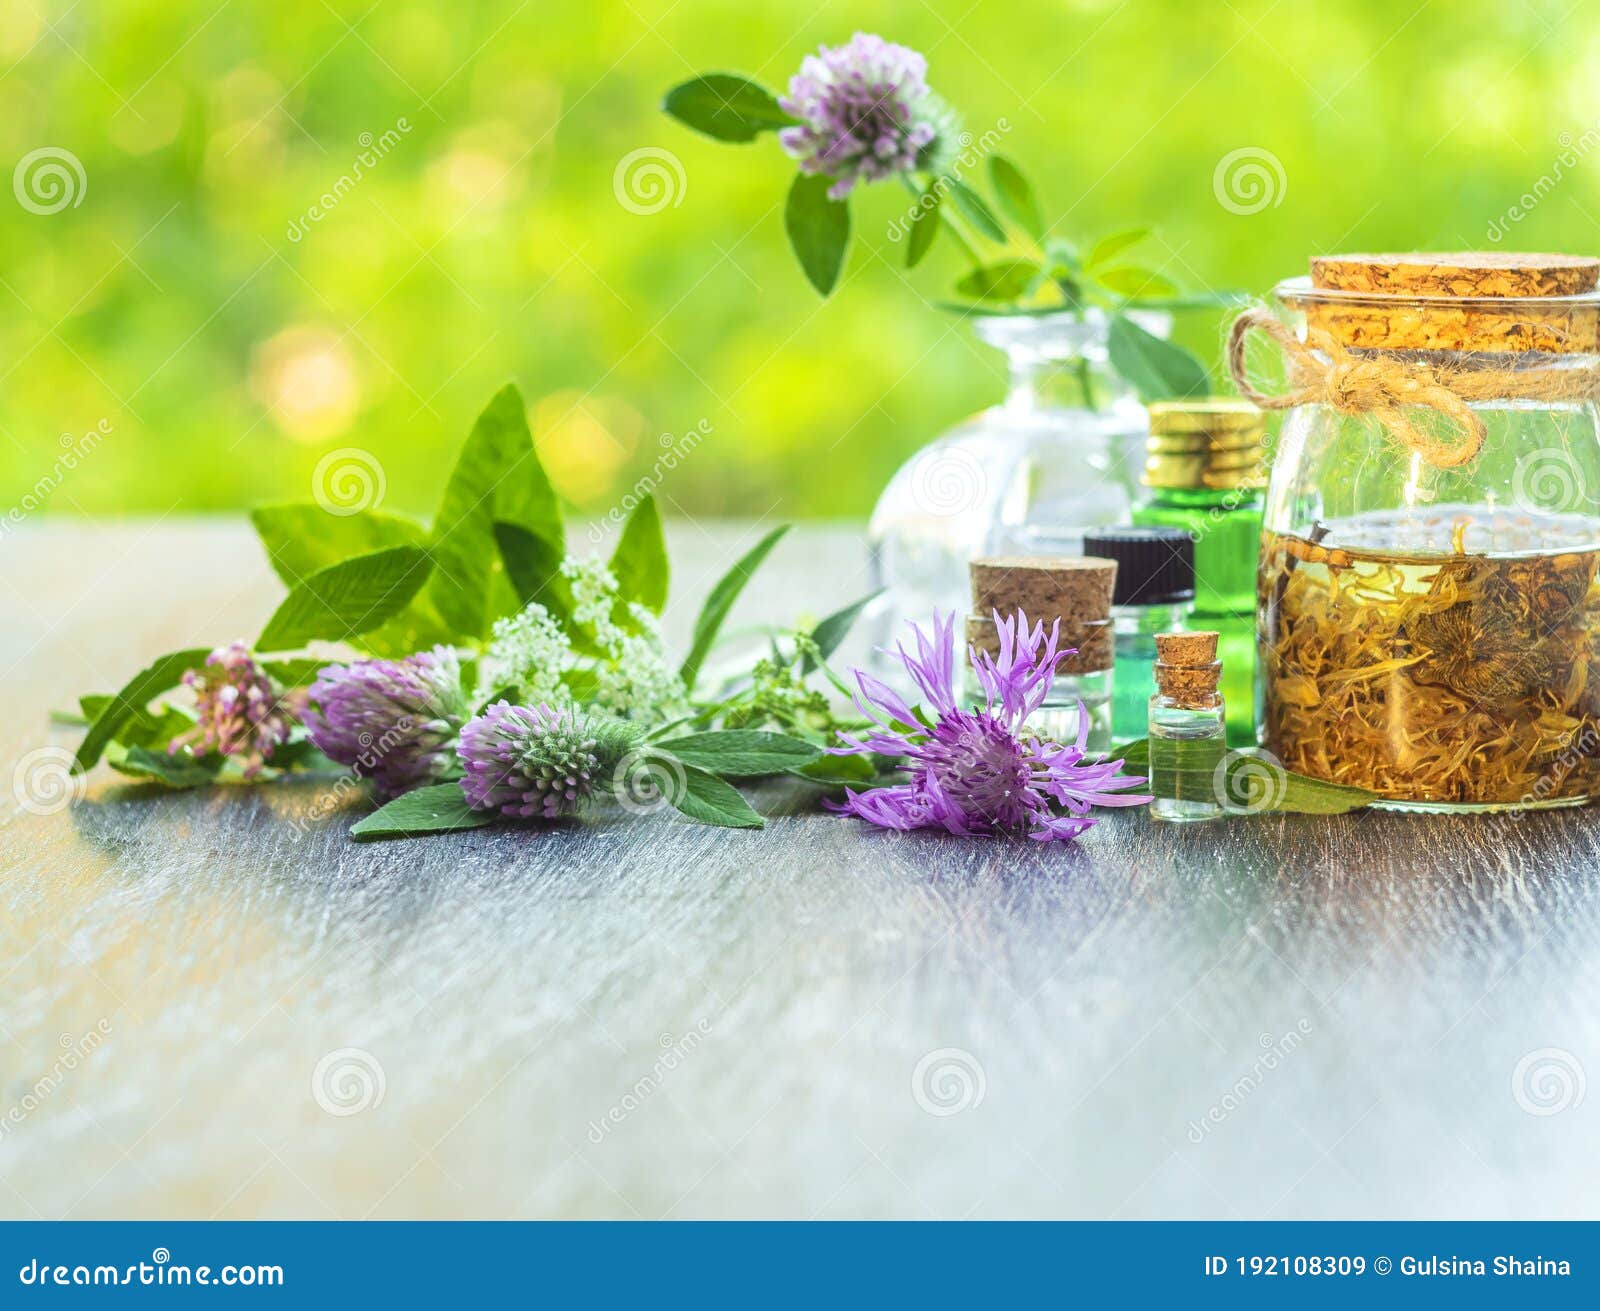 herbs, bottles on wooden background. alternative medicine, natural healing